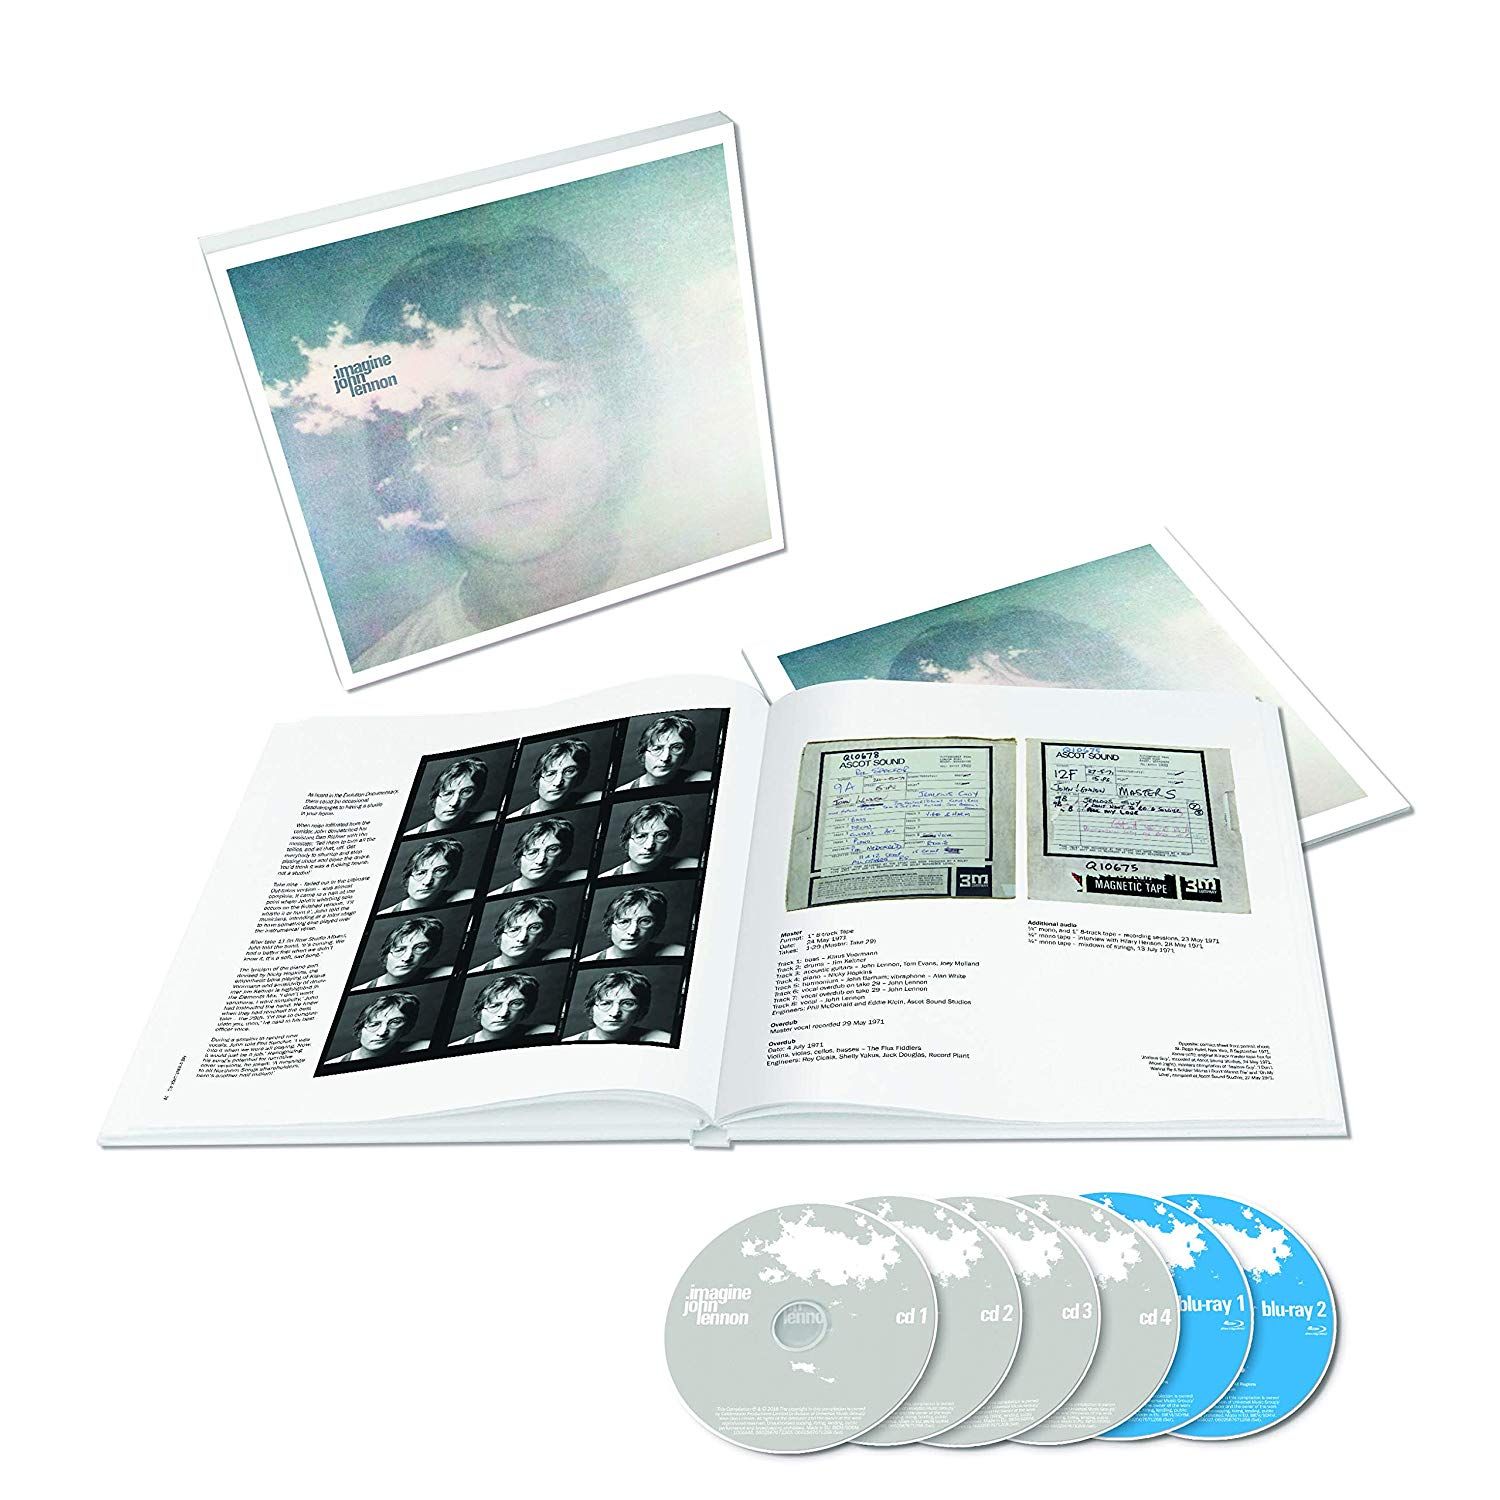 Imagine box. John Lennon - imagine (the Ultimate collection) (2018). John Lennon – Anthology 1998. Imagine the Ultimate collection John Lennon. John Lennon CD.